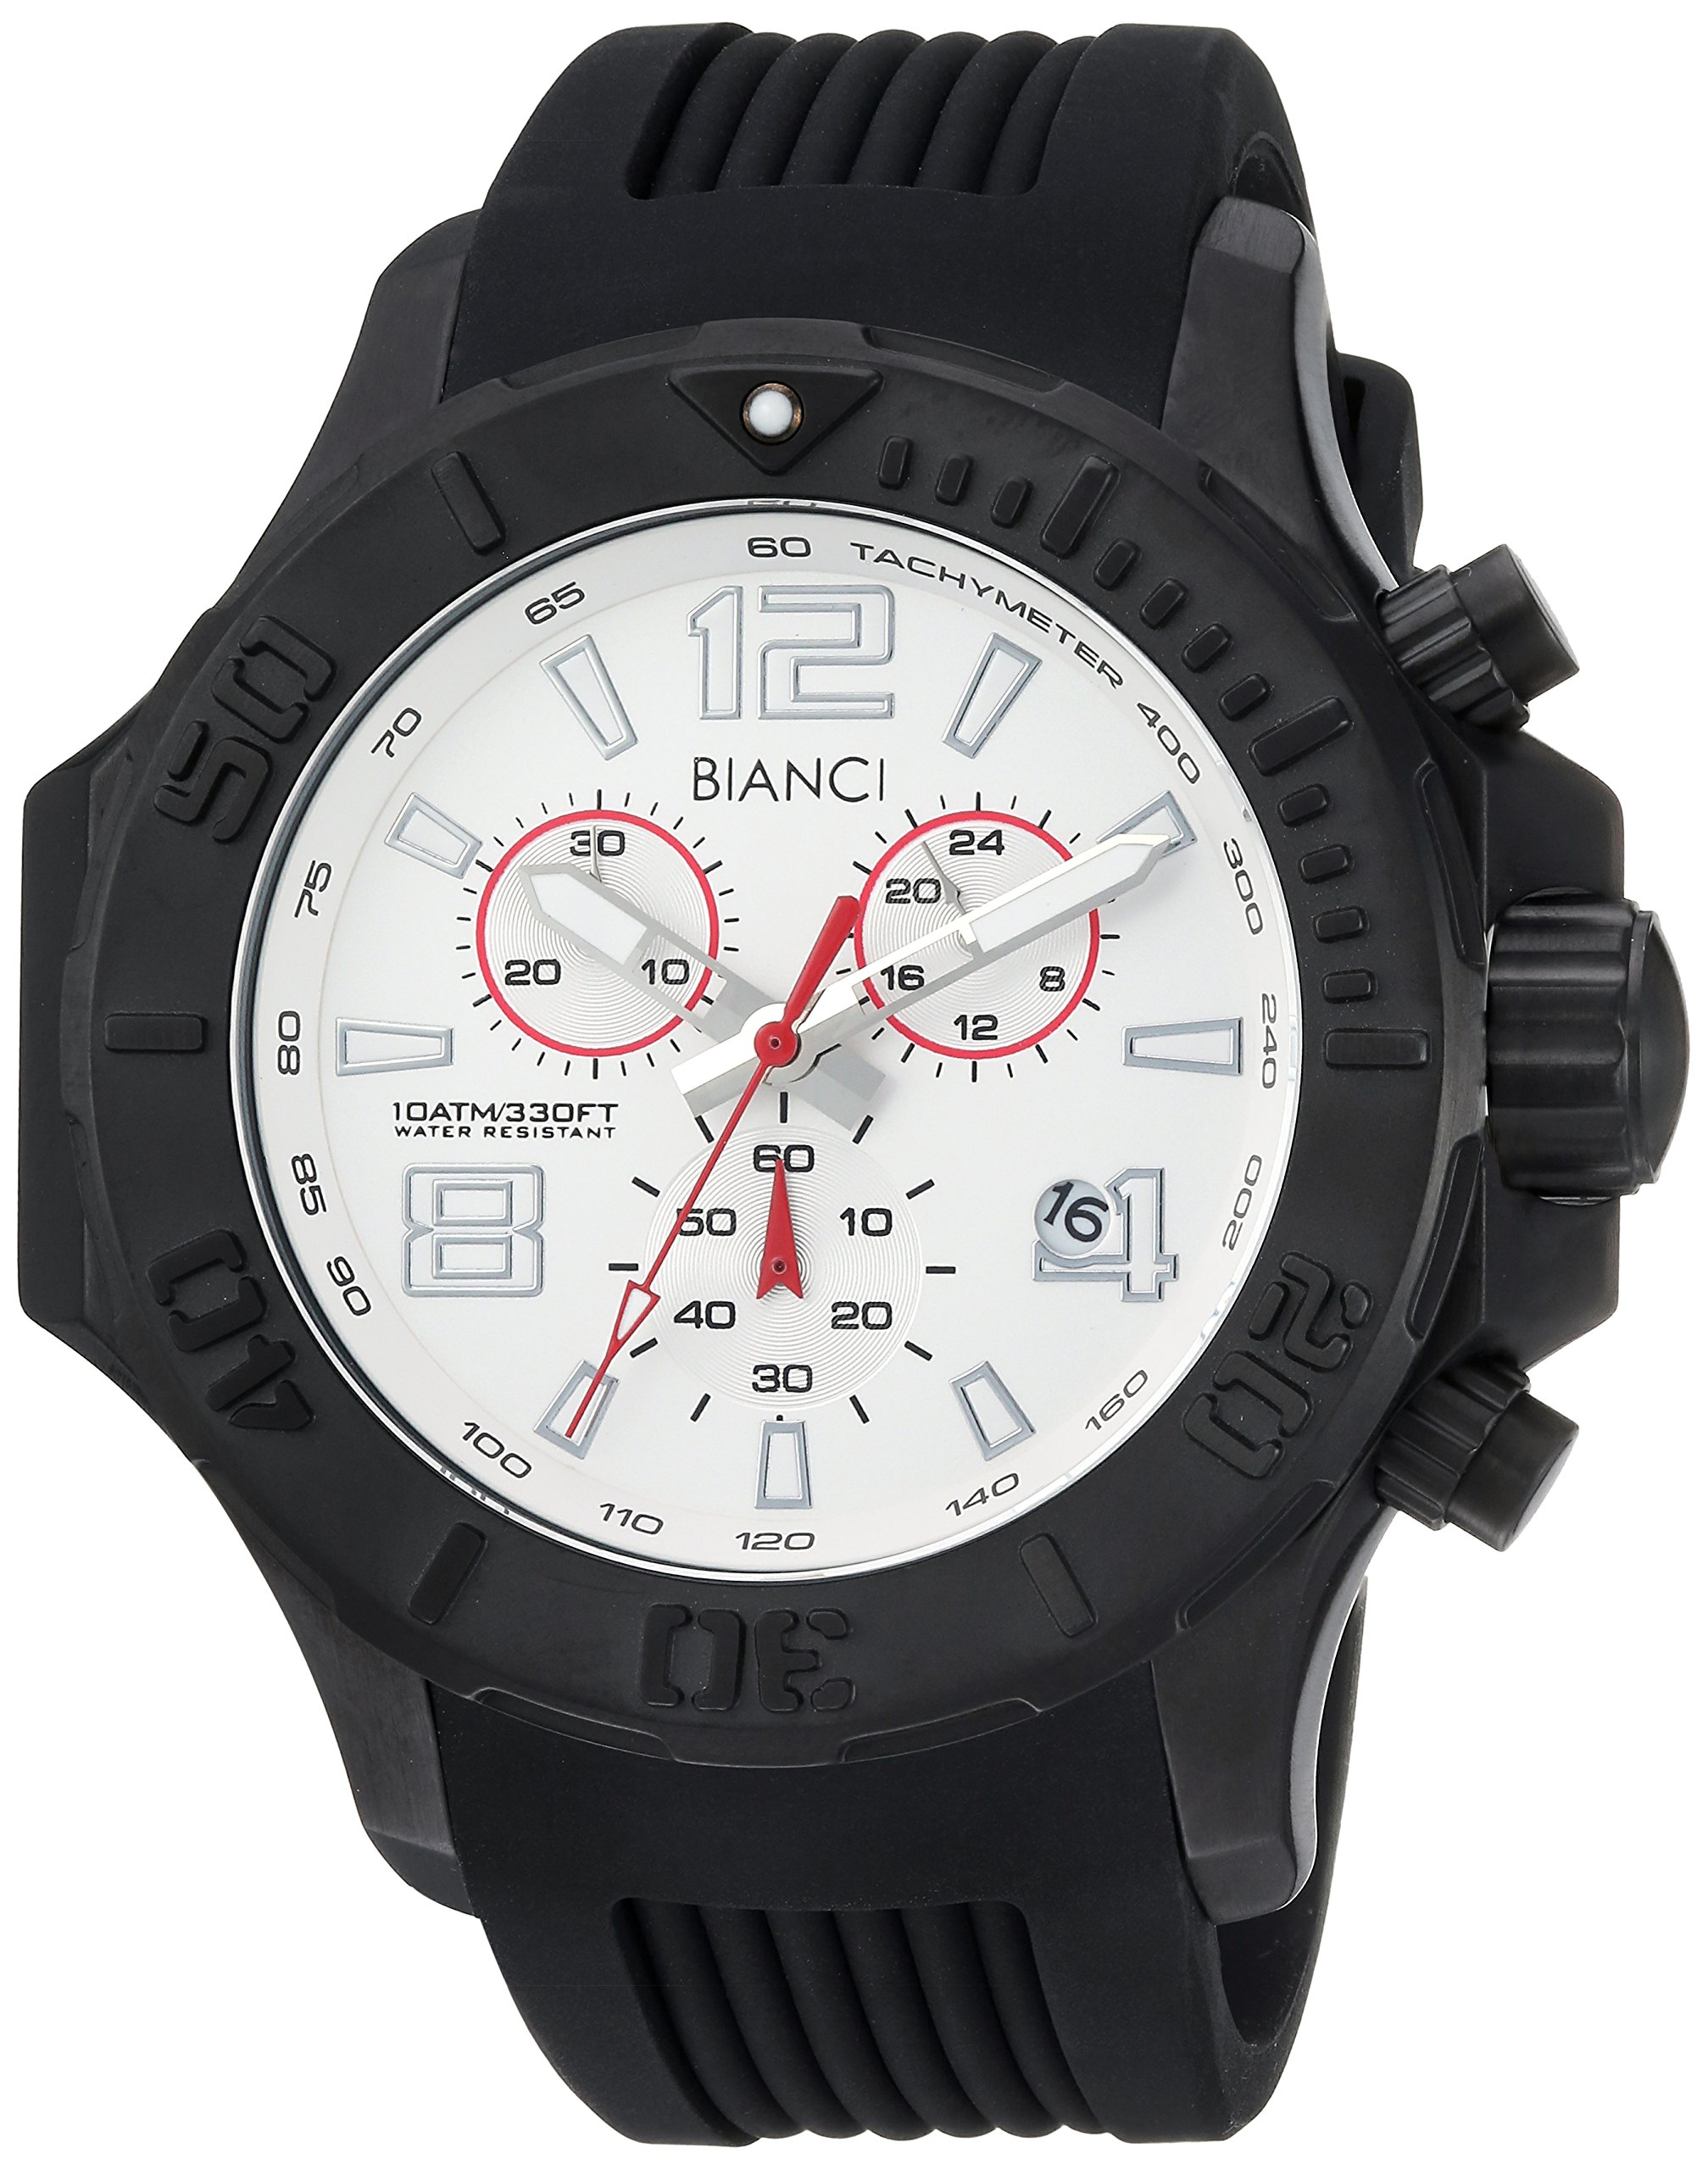 ROBERTO BIANCI WATCHES Men's RB55053 Aulia Analog Display Quartz Black Watch